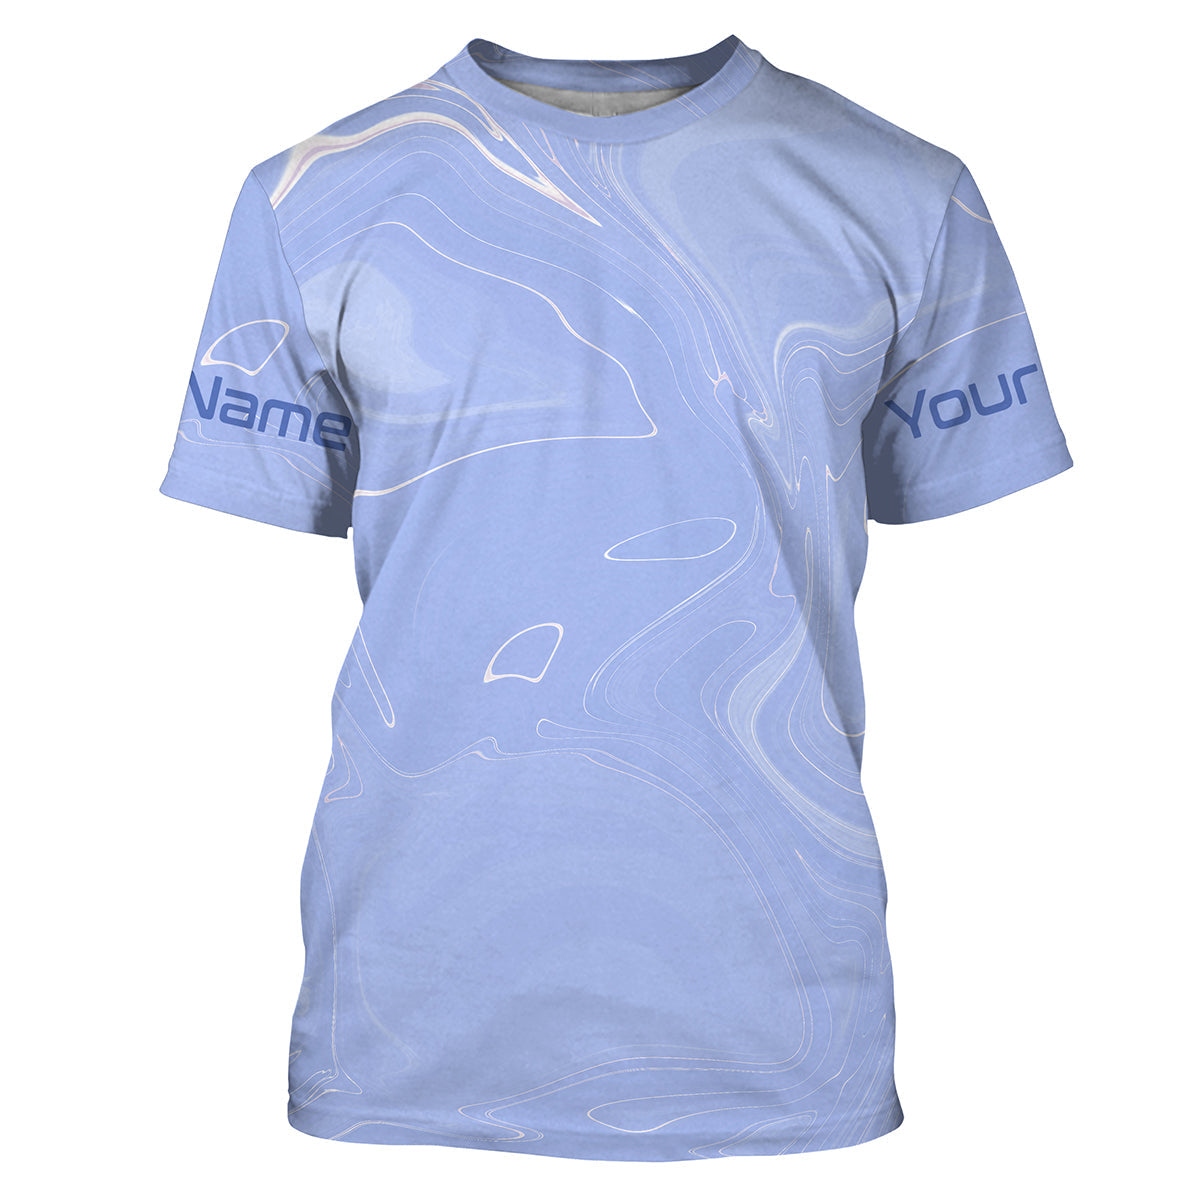 Blue Tie Dye Custom Long Sleeve performance Fishing Shirts